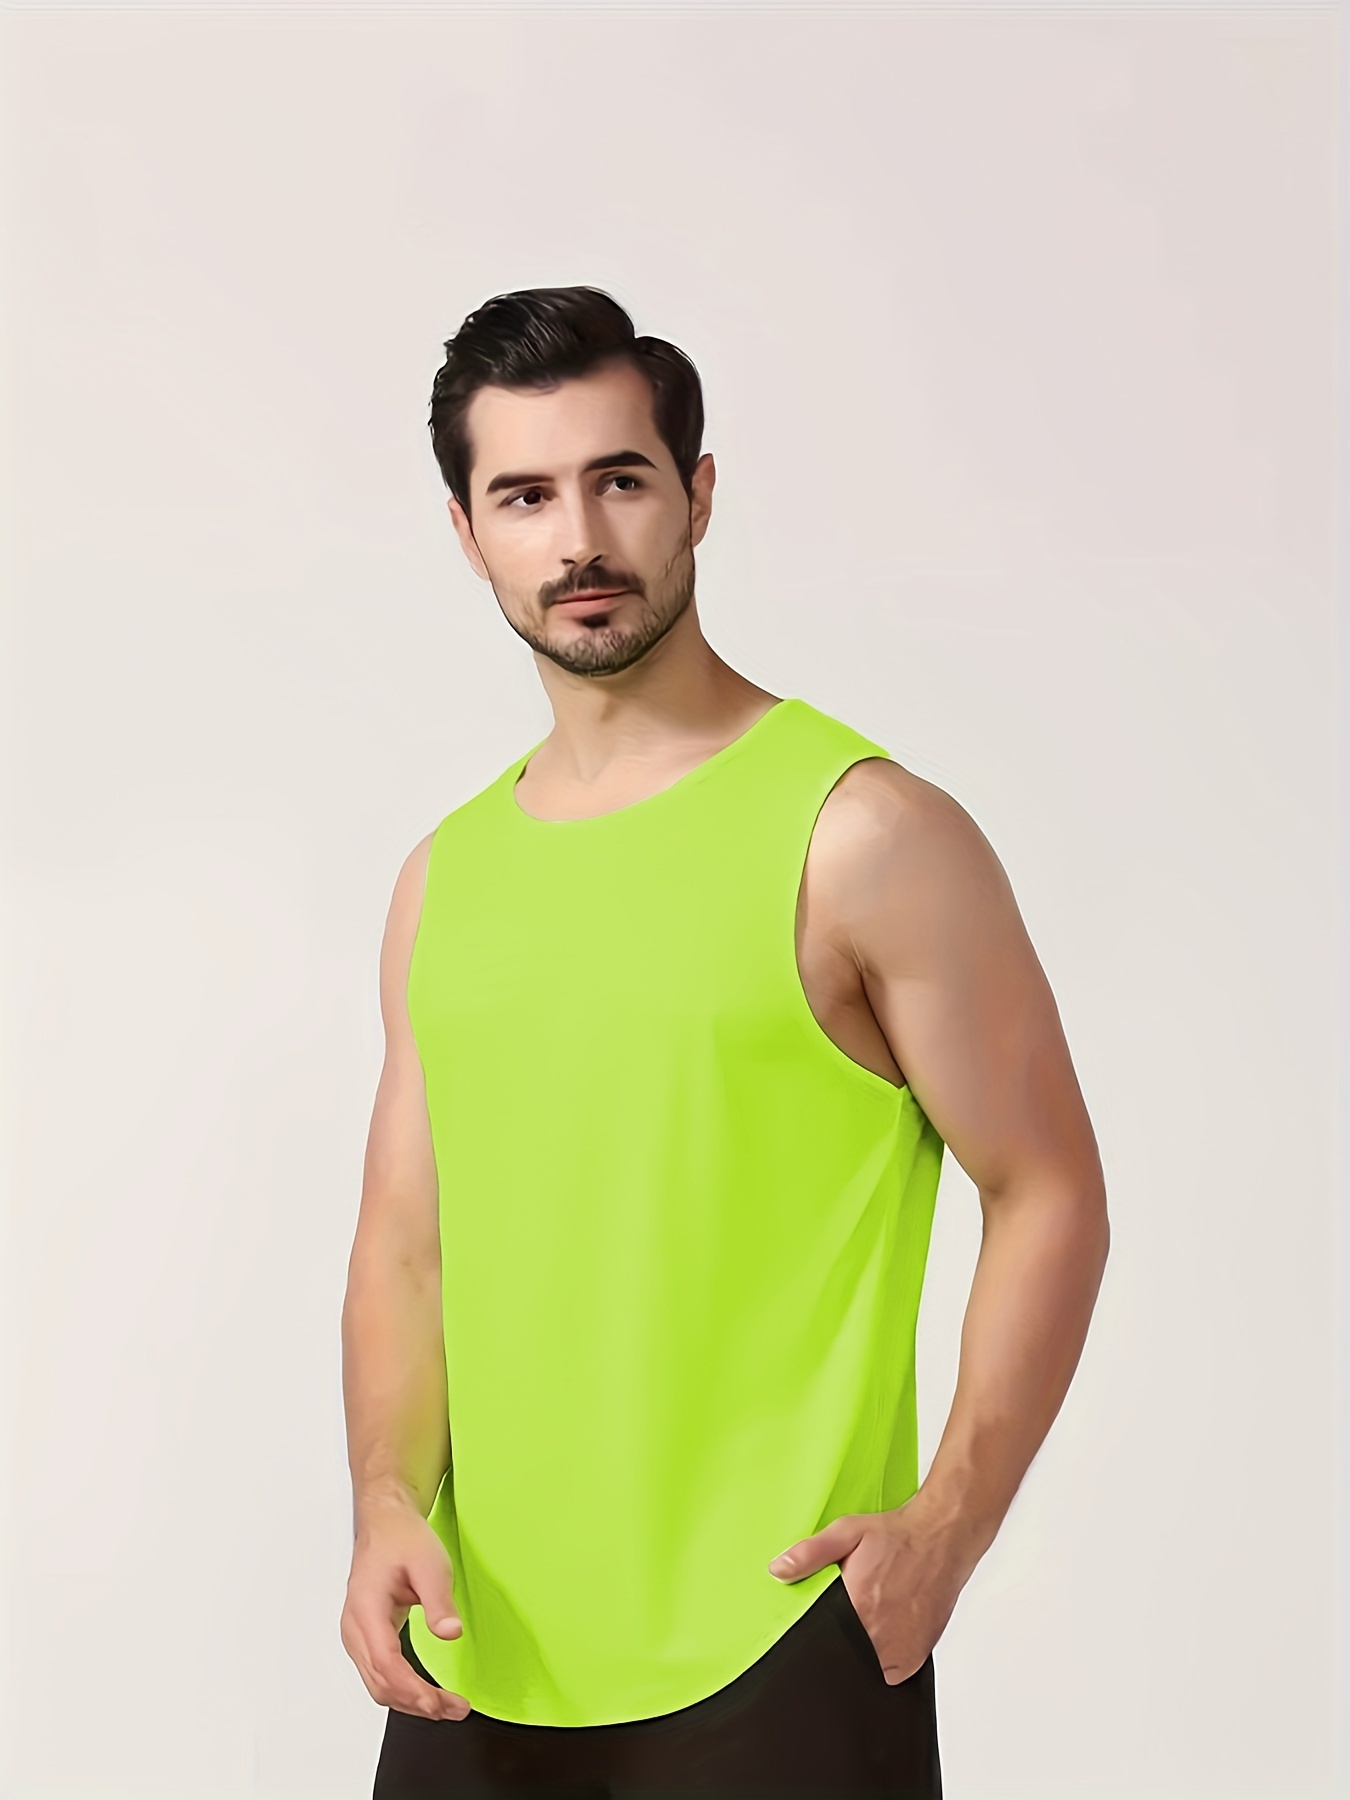 Camiseta sin mangas de compresión fuerte ideal para uso diario con alg